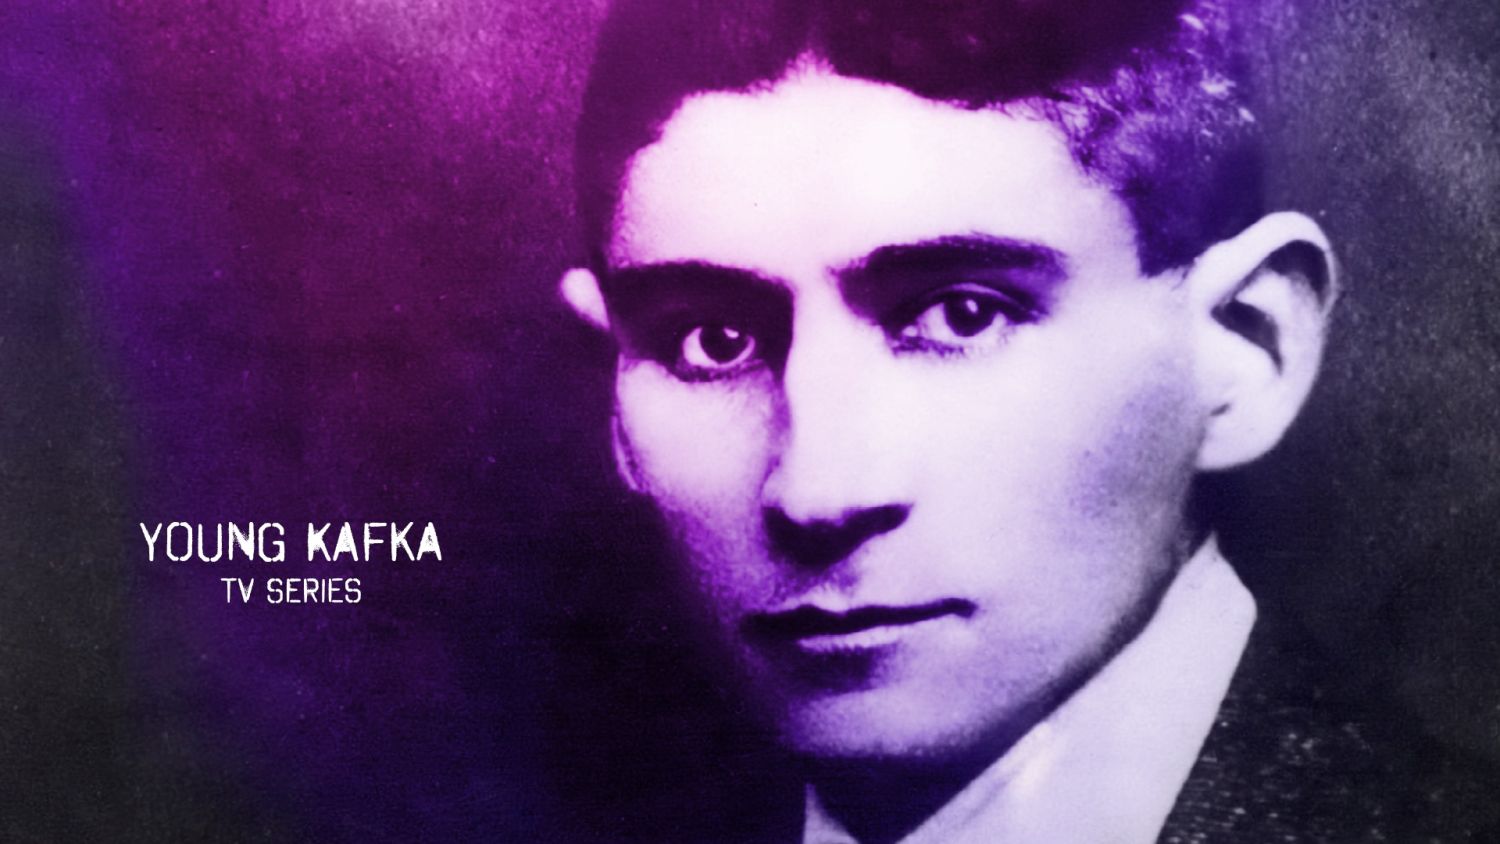 Young Kafka